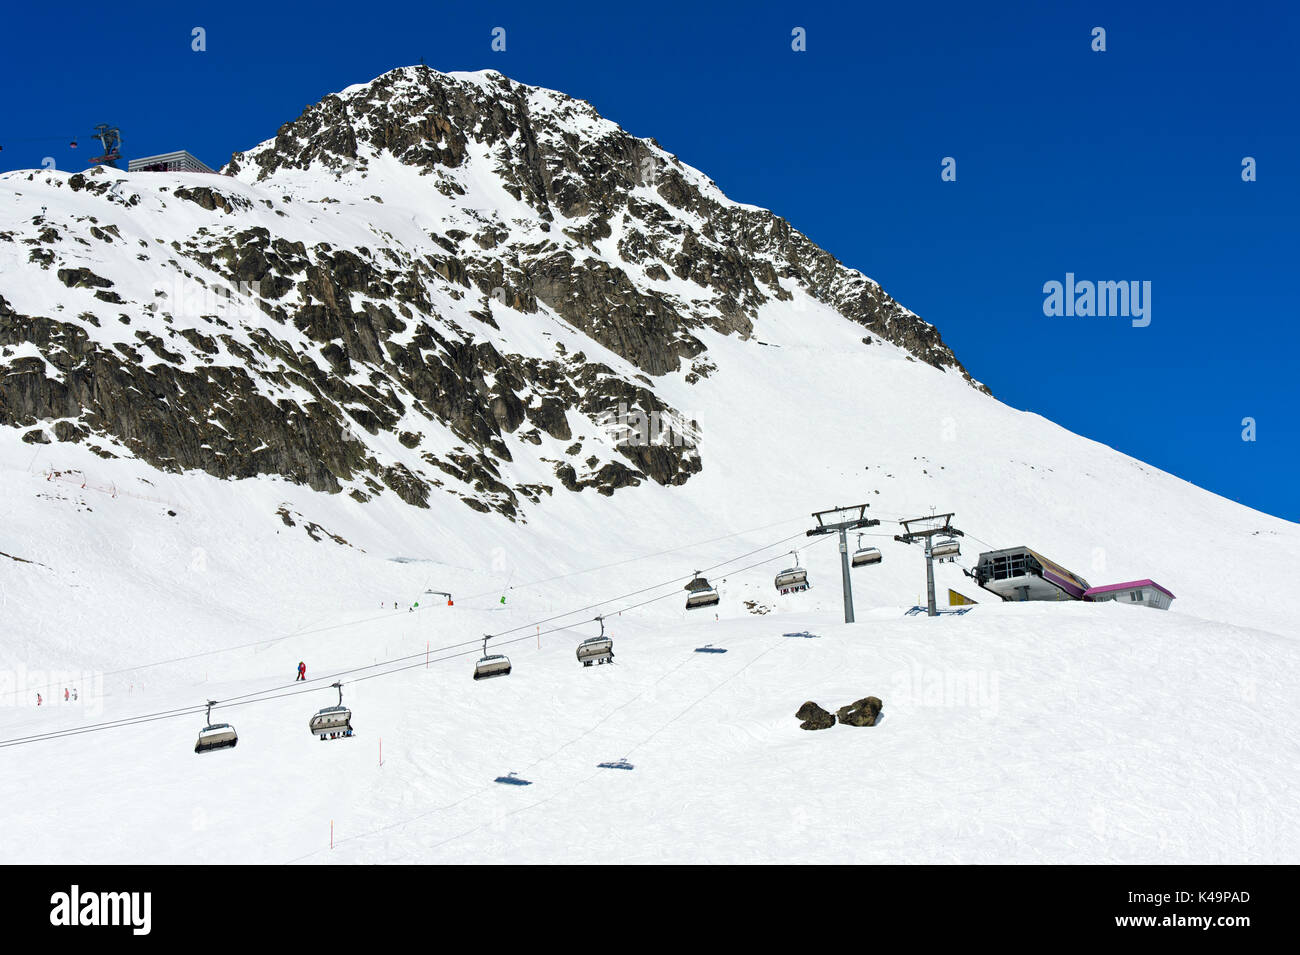 Schönbiel Chairlift Beneath The Peak Bettmerhorn, Bettmeralp, Skiing Area Aletscharena,Valais, Switzerland Stock Photo